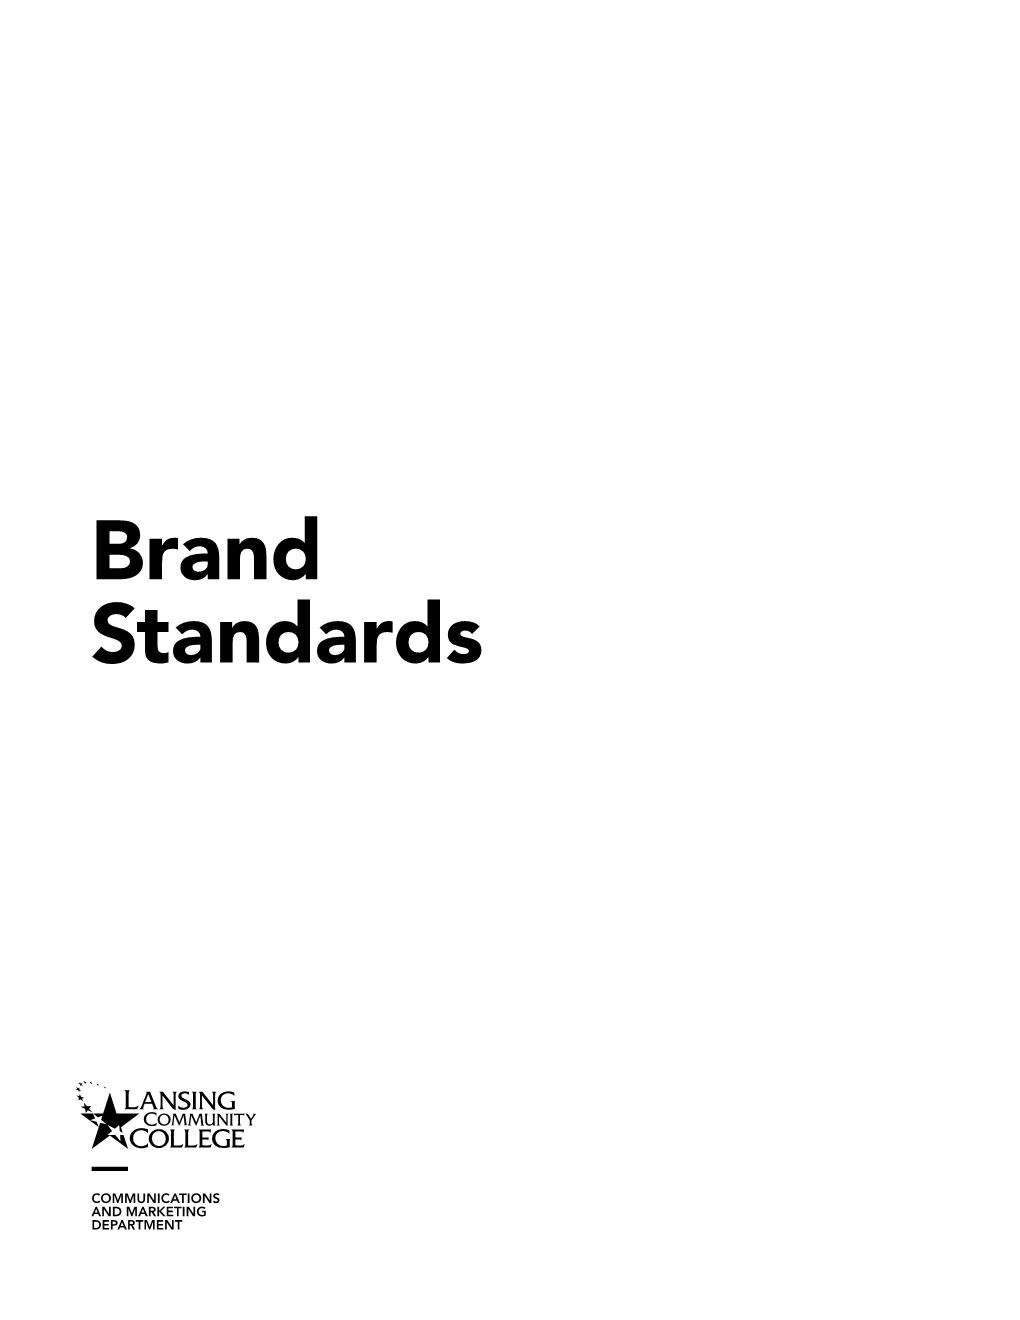 Brand Standards Lansing Community College 411 N